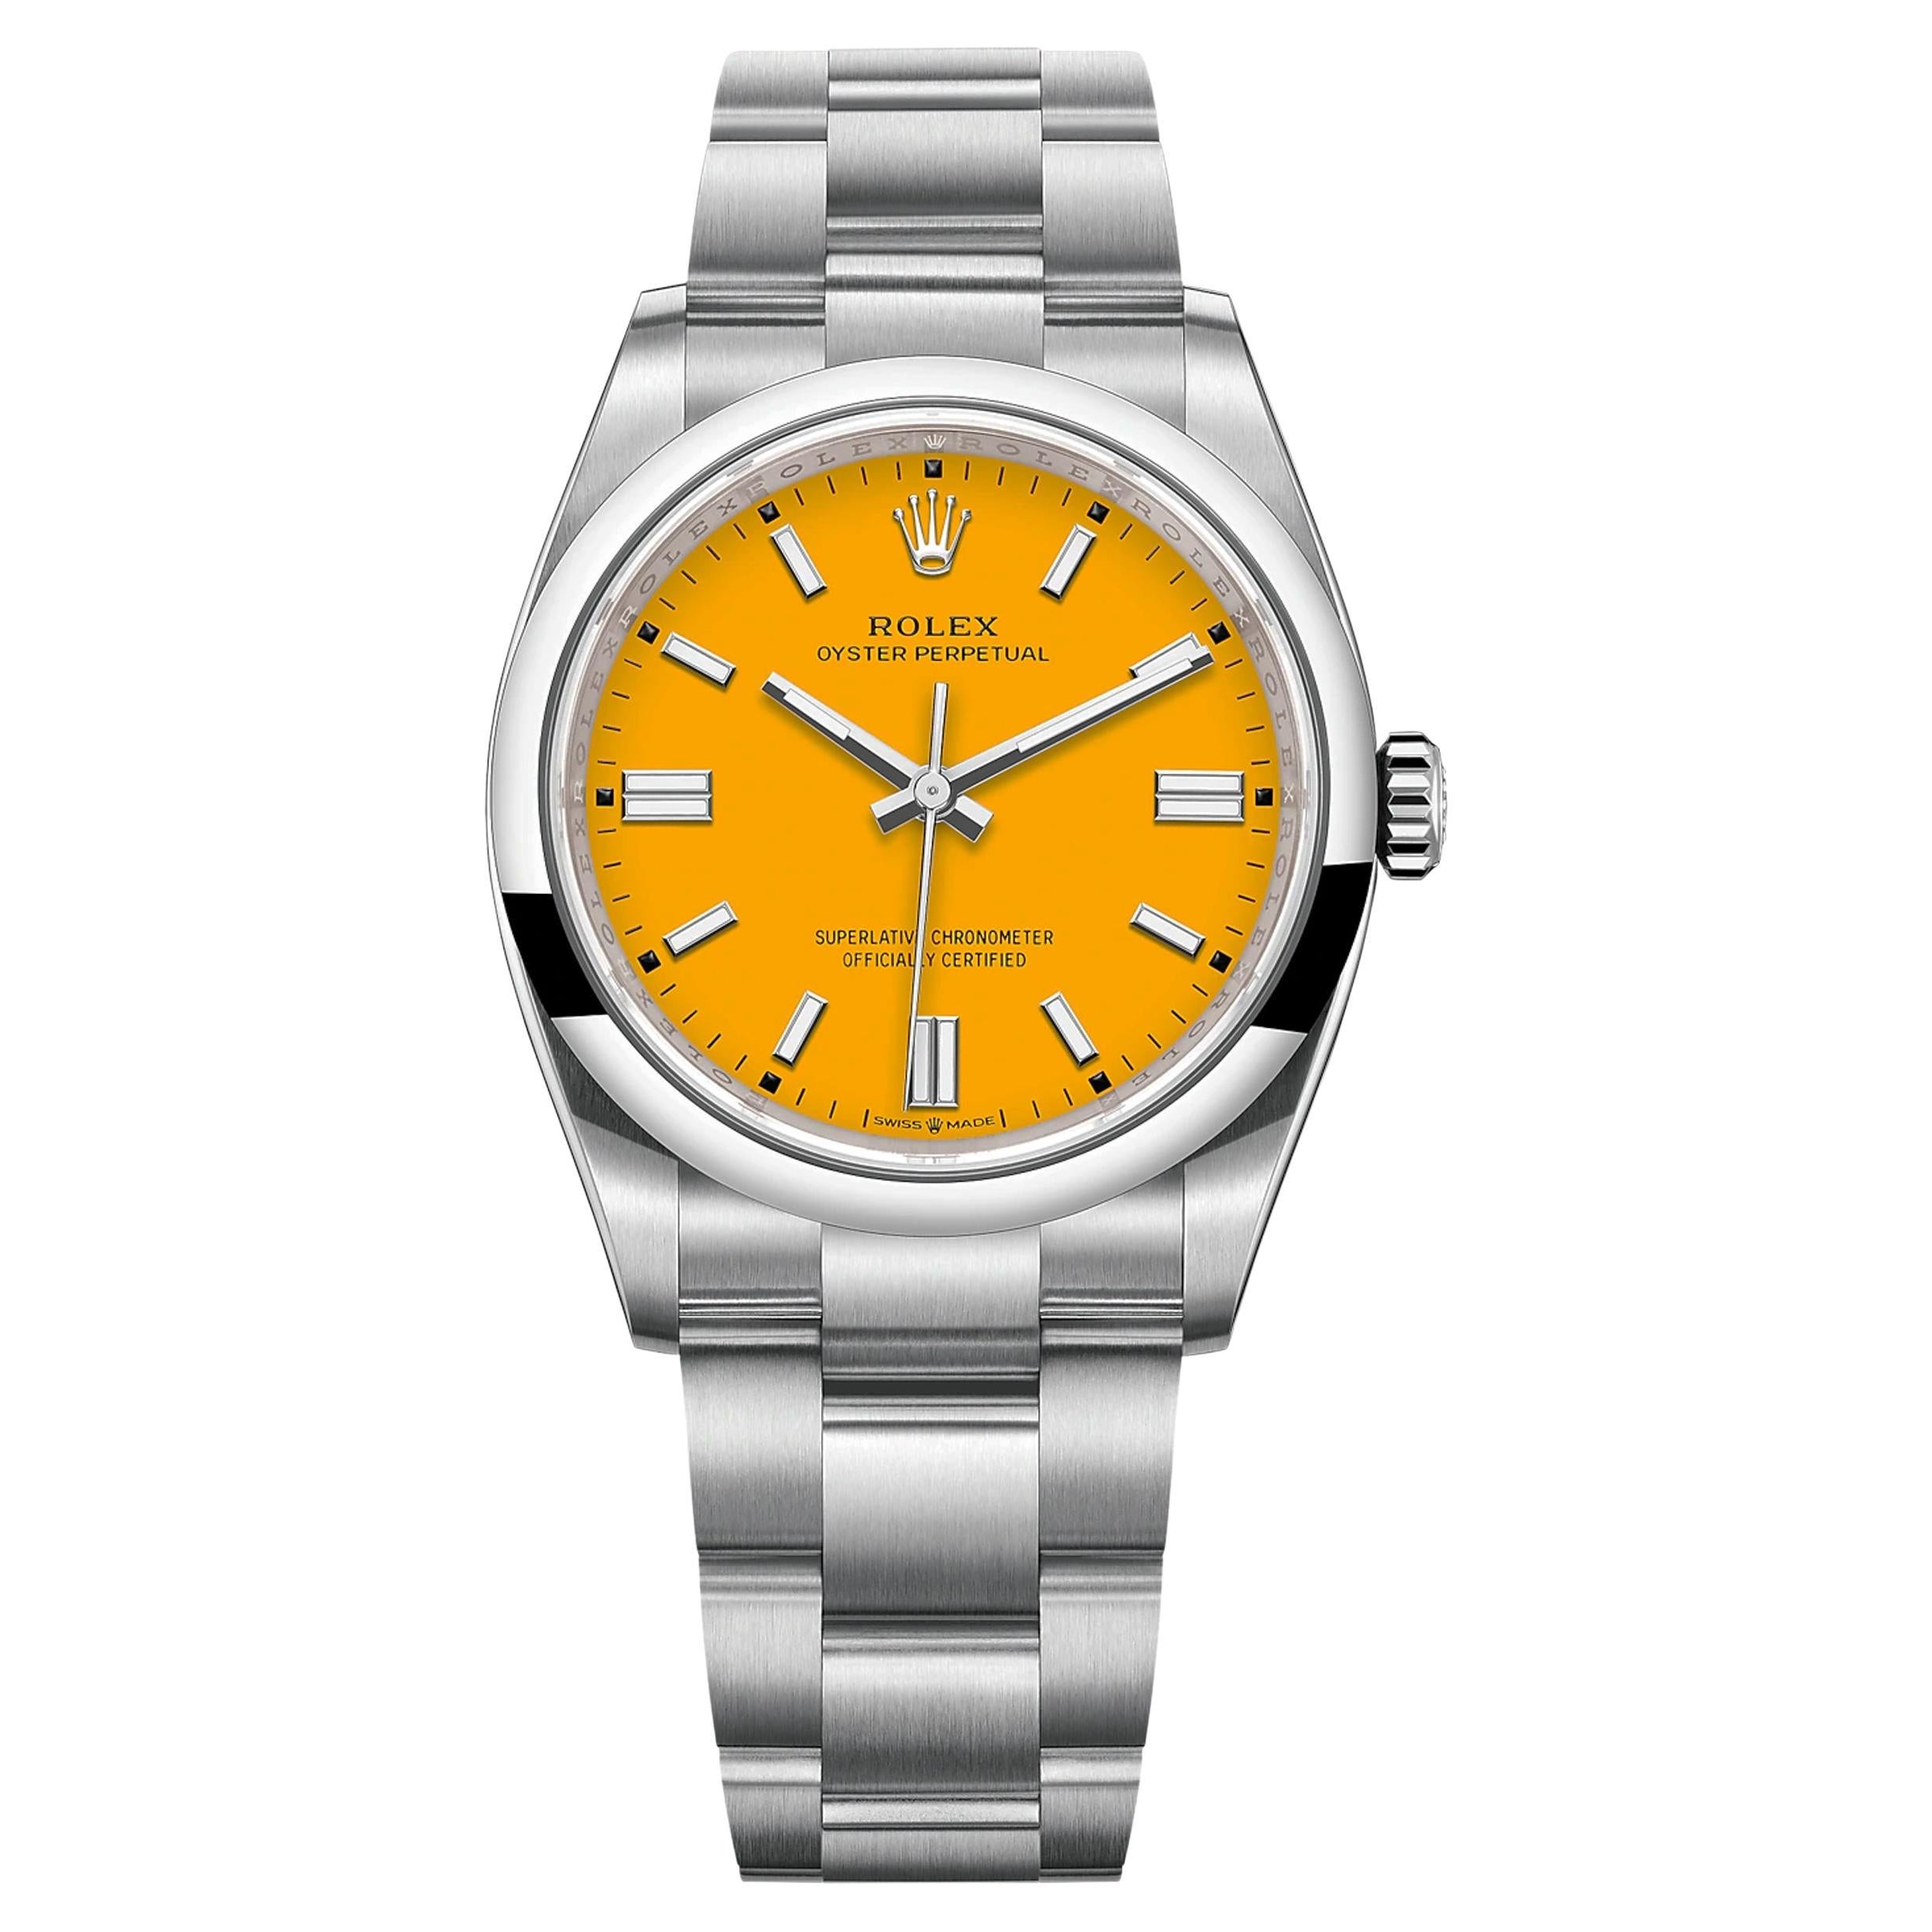 Reloj Rolex Oyster Perpetual Acero Personalizado Esfera Amarilla Oyster Hombre 116000